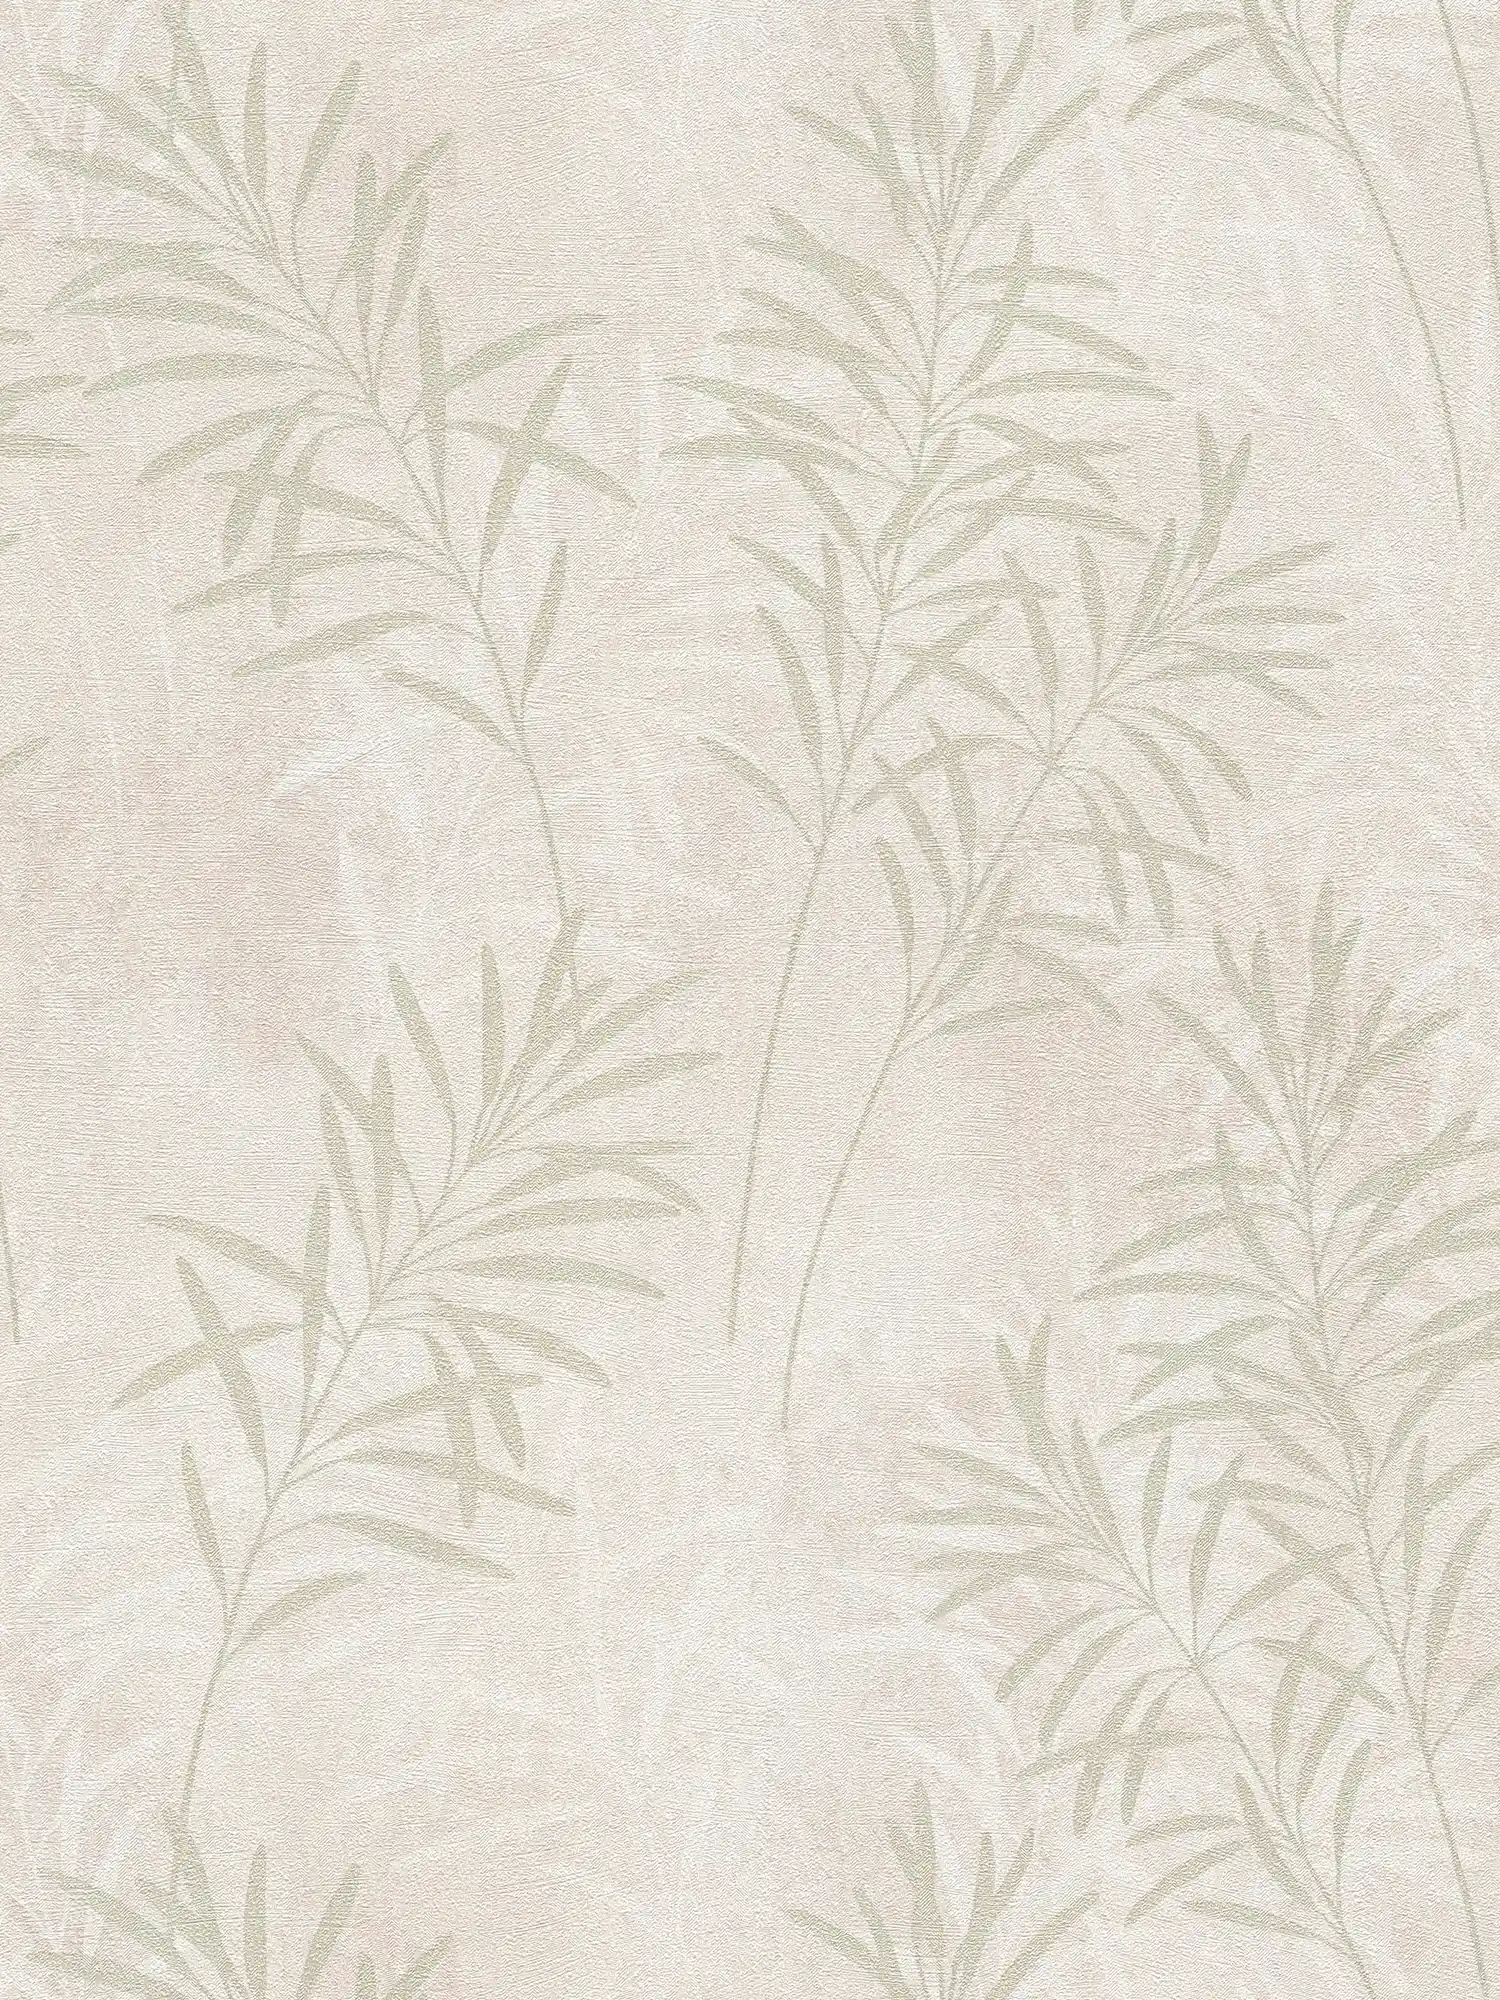 Scandinavian style non-woven wallpaper with floral grasses - cream, green, metallic
